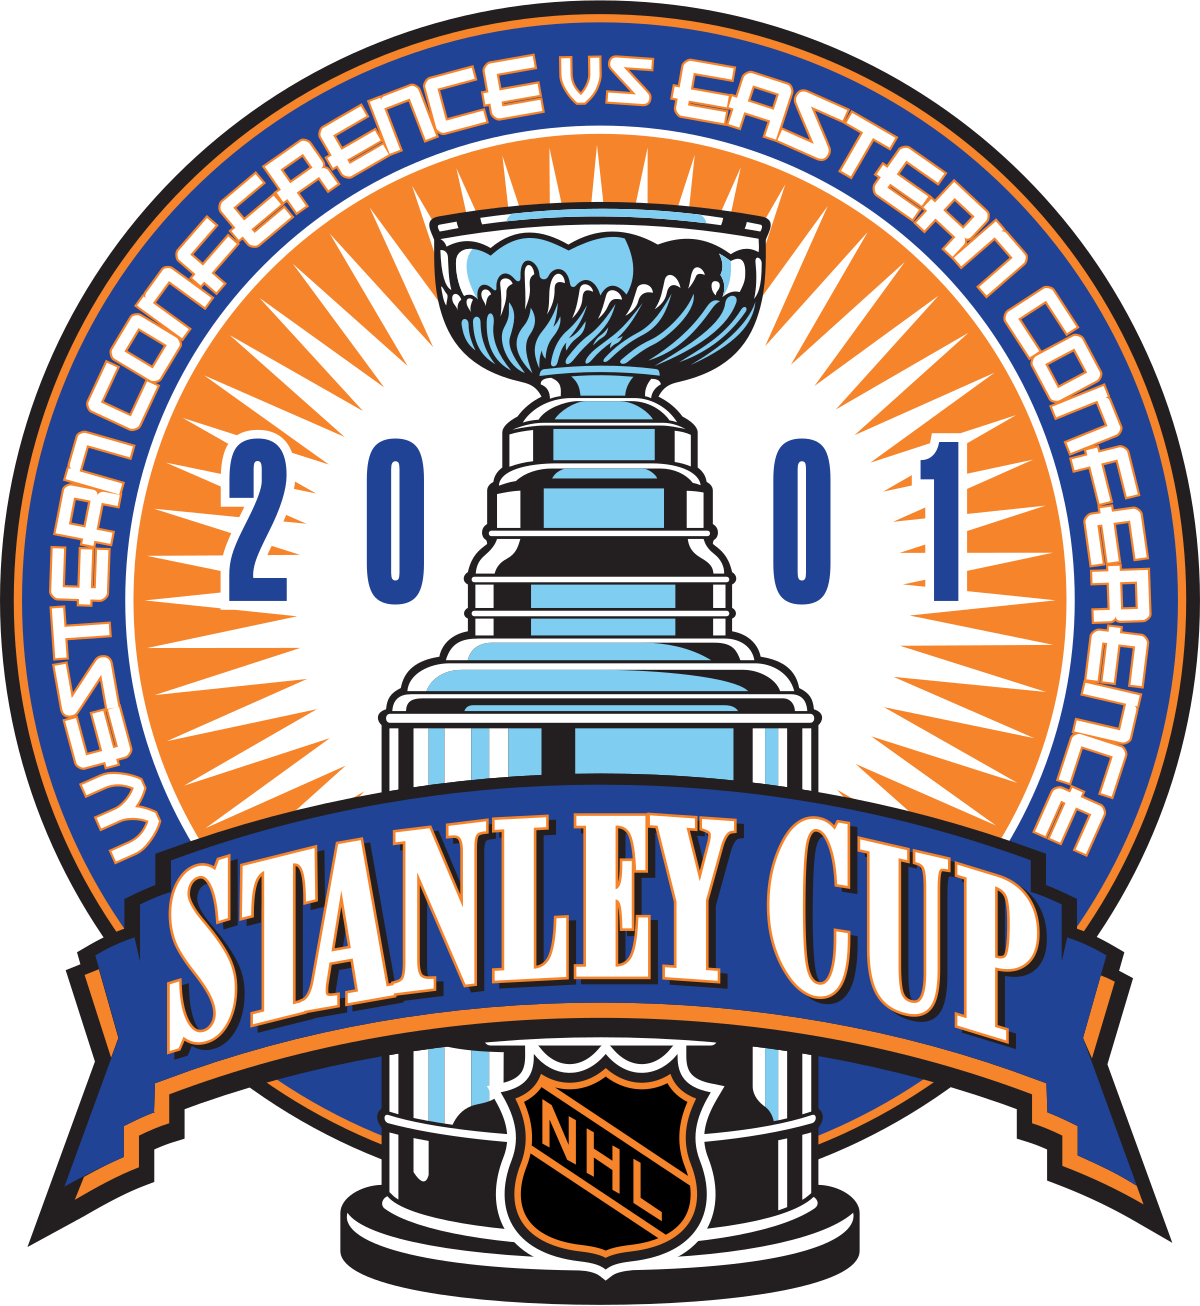 https://upload.wikimedia.org/wikipedia/en/thumb/b/b9/2001_Stanley_Cup_Logo.svg/1200px-2001_Stanley_Cup_Logo.svg.png